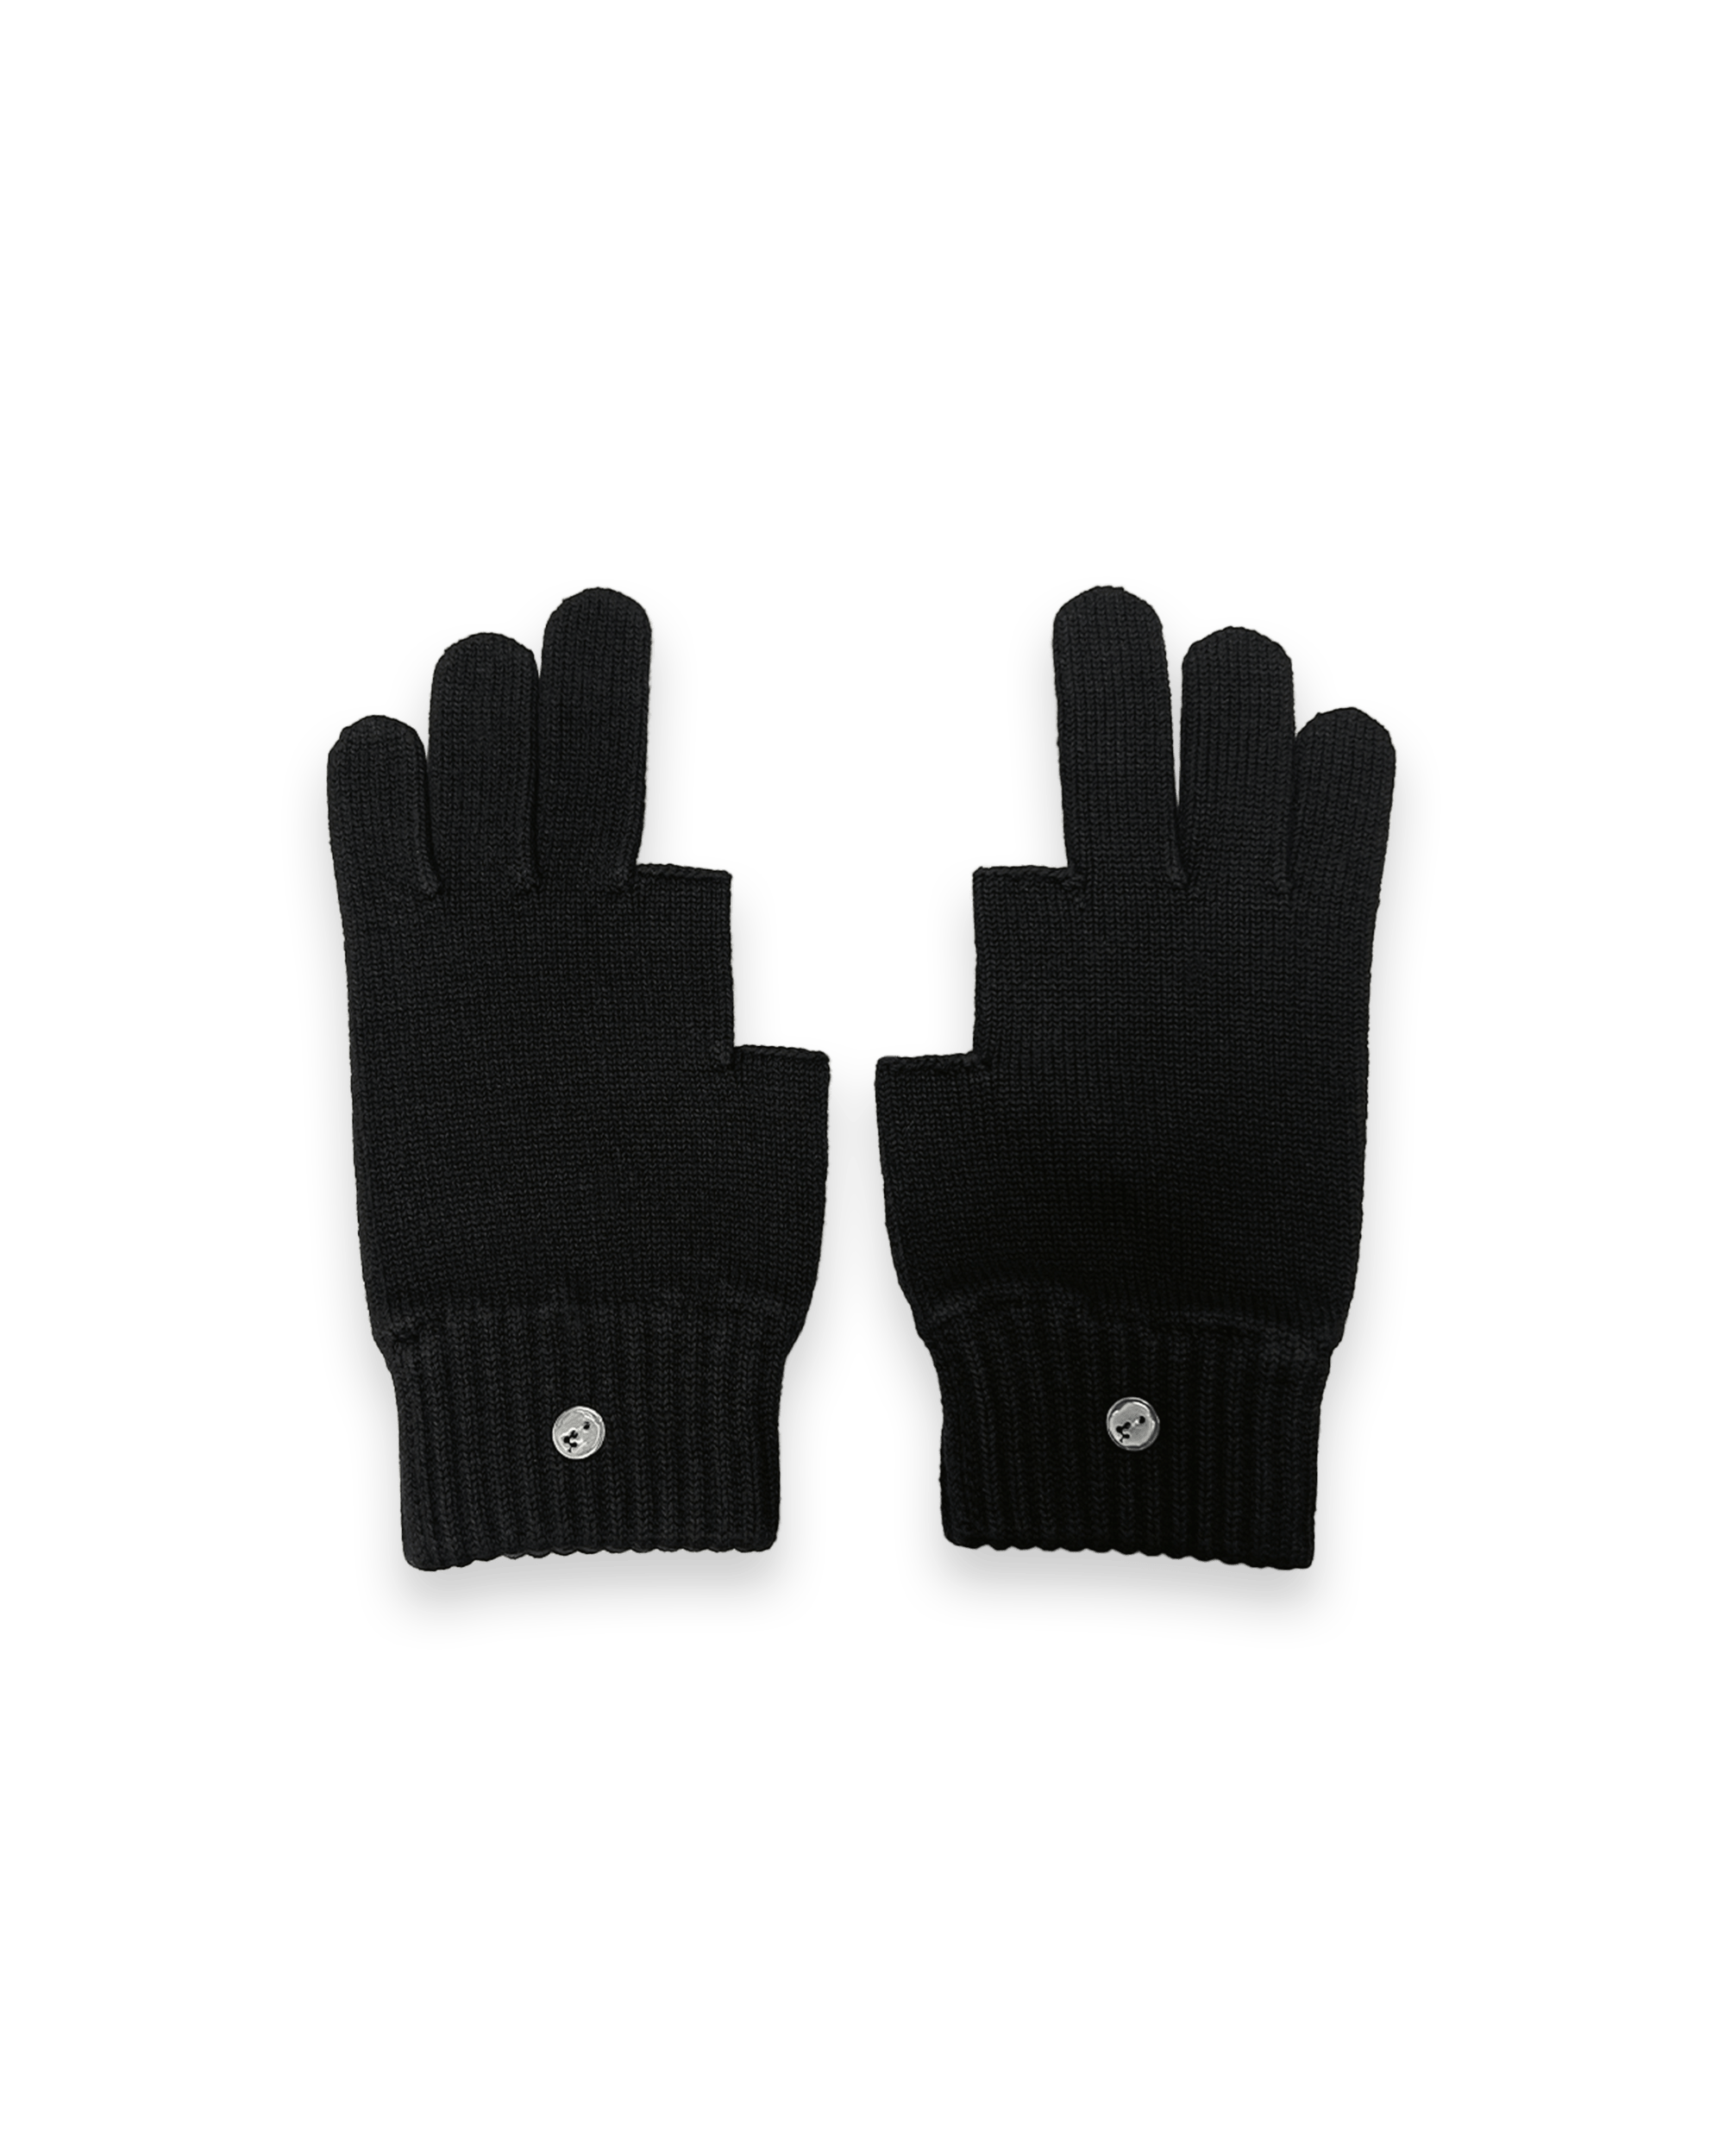 'three-fingers' gloves